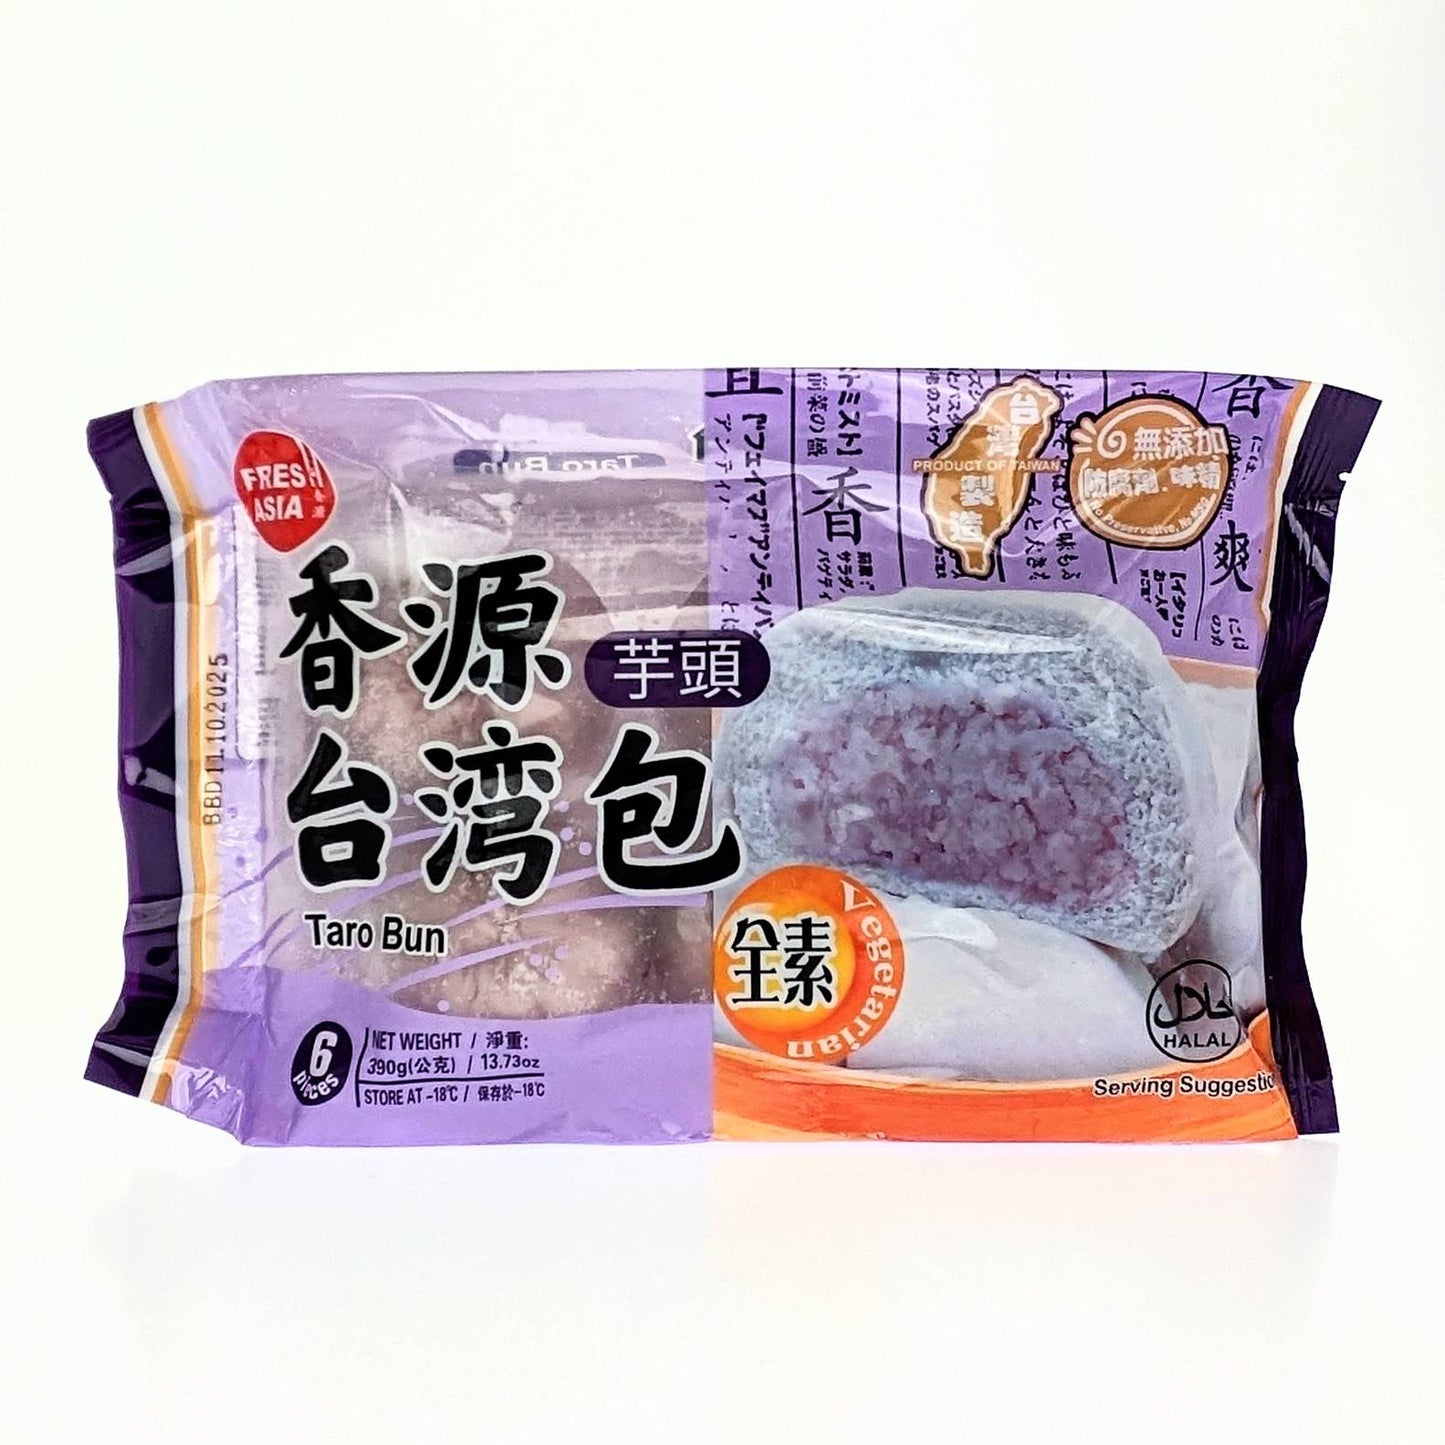 FRESHASIA Taro Bun 6-Piece 390g 香源芋頭包6個 390g